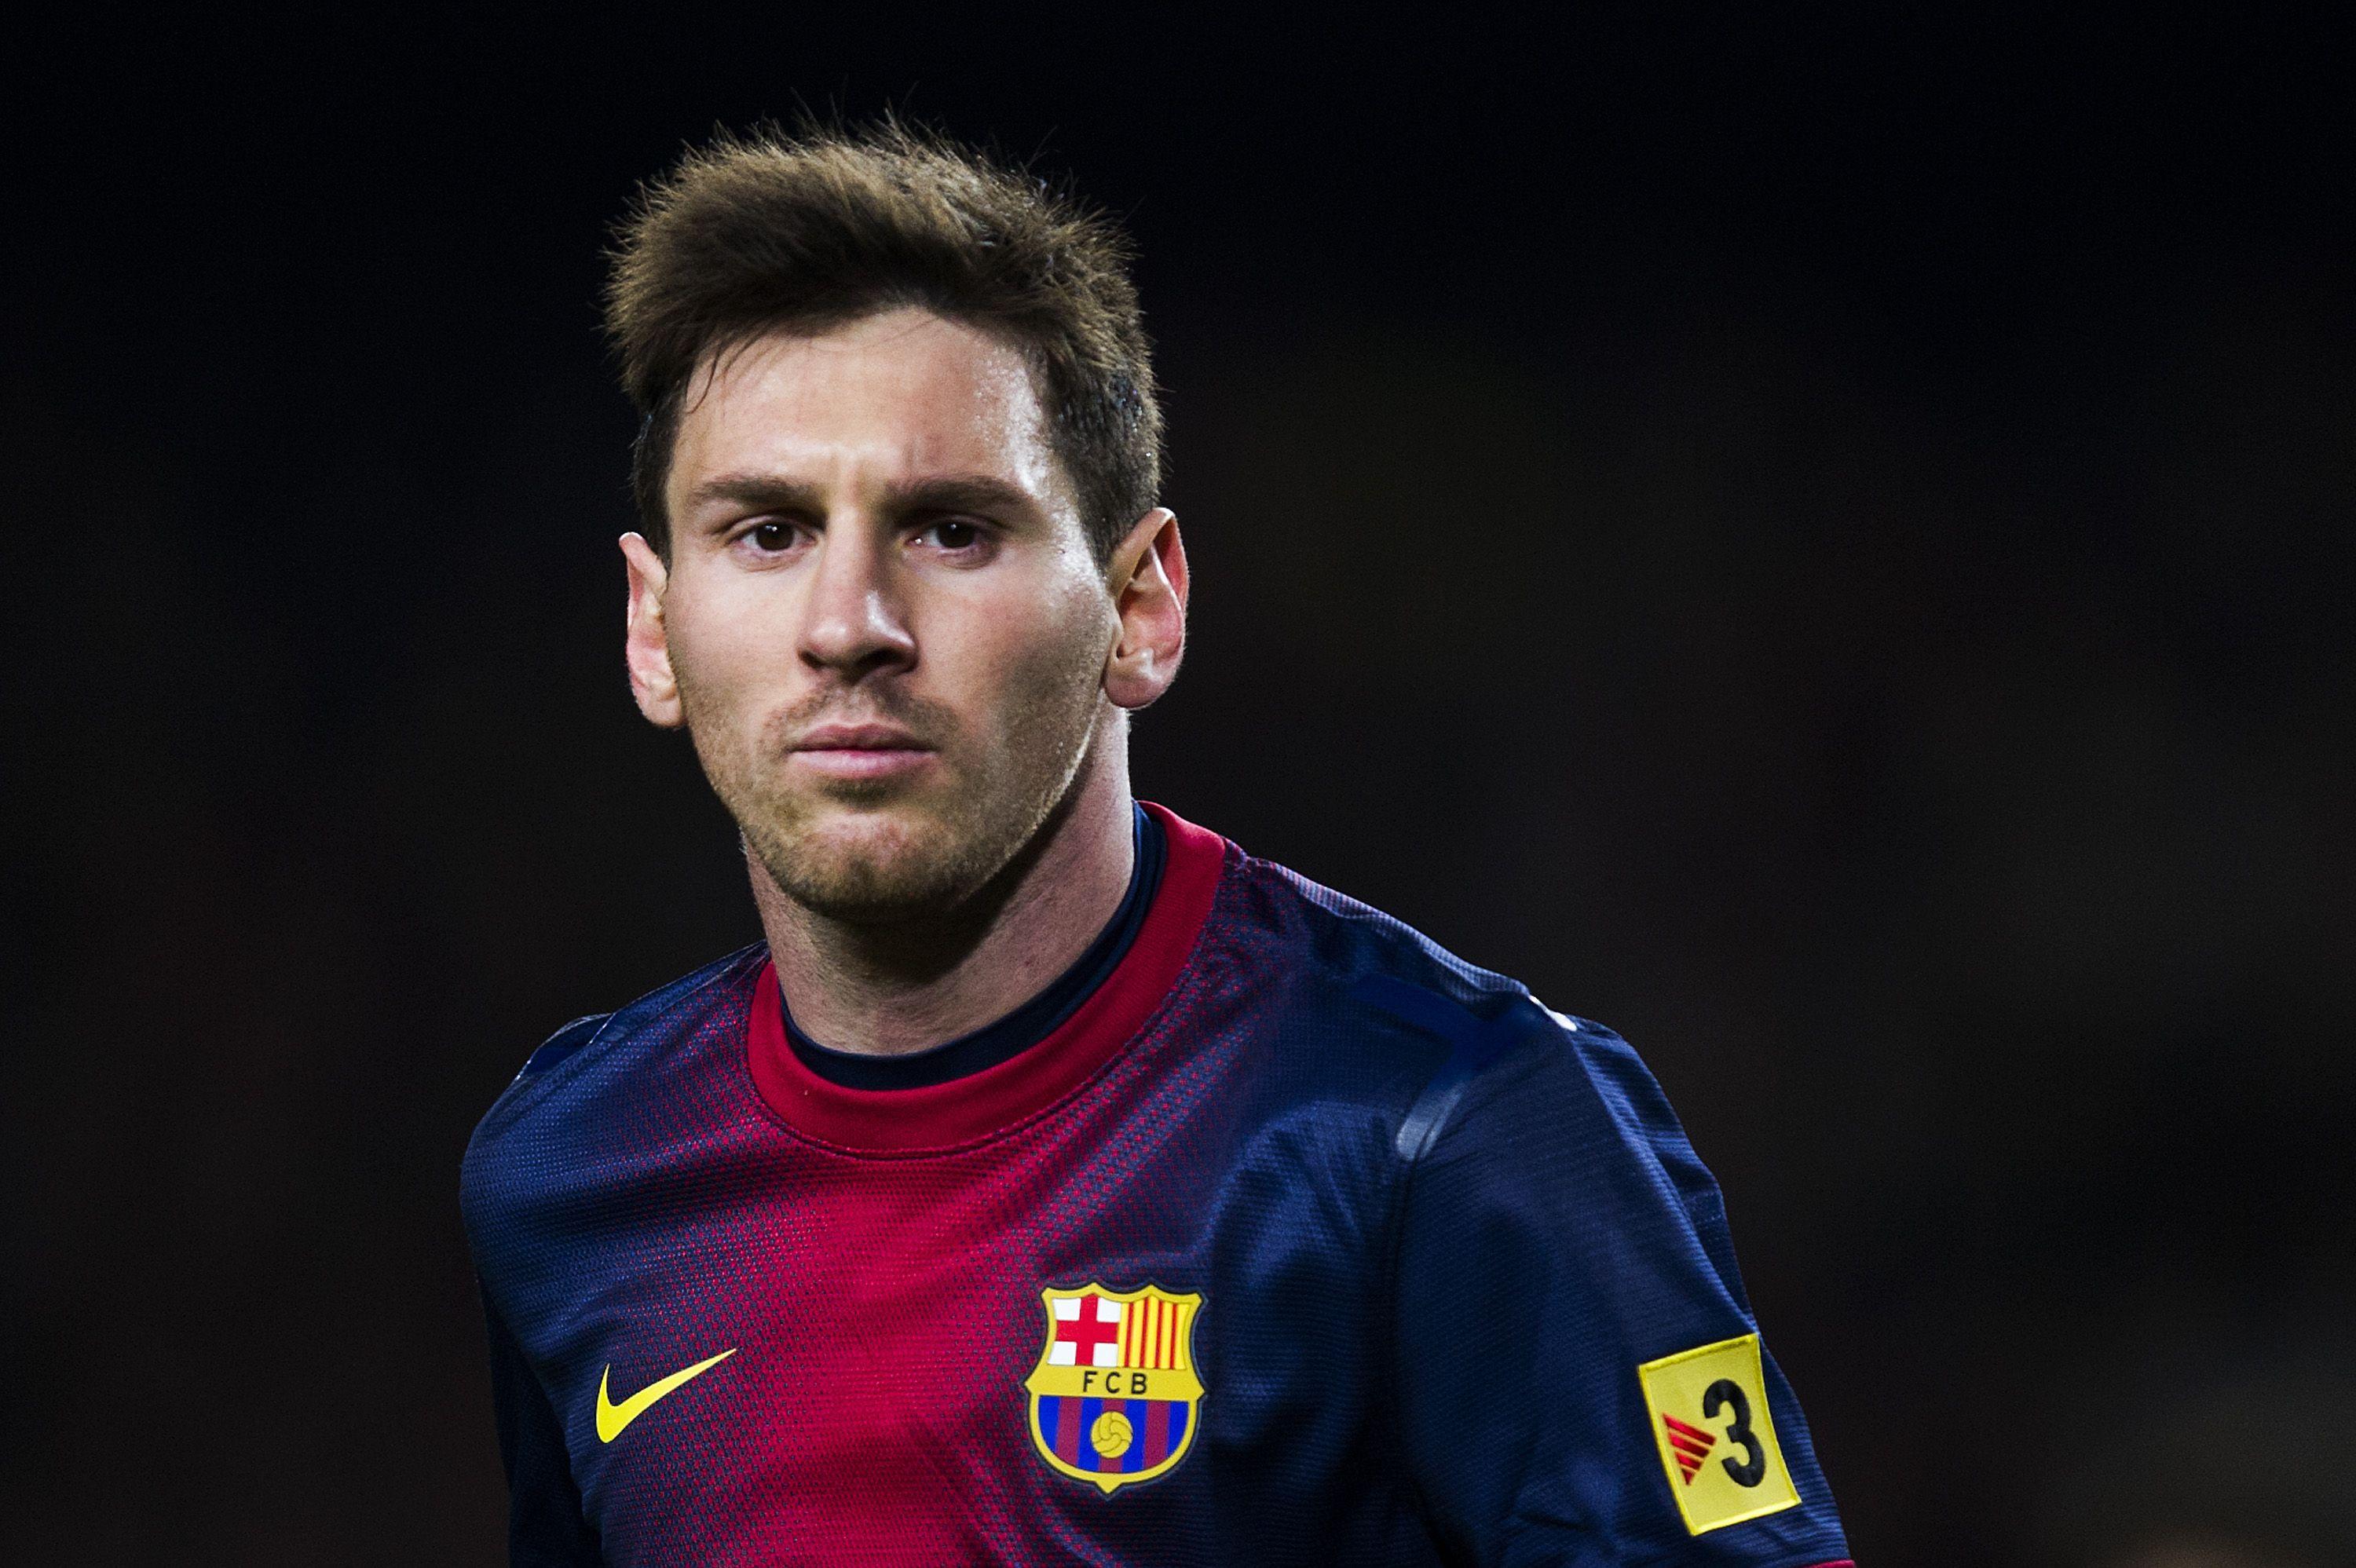 Wallpaper HD Of Lionel Messi Sswallpapernetsports Smart Full High